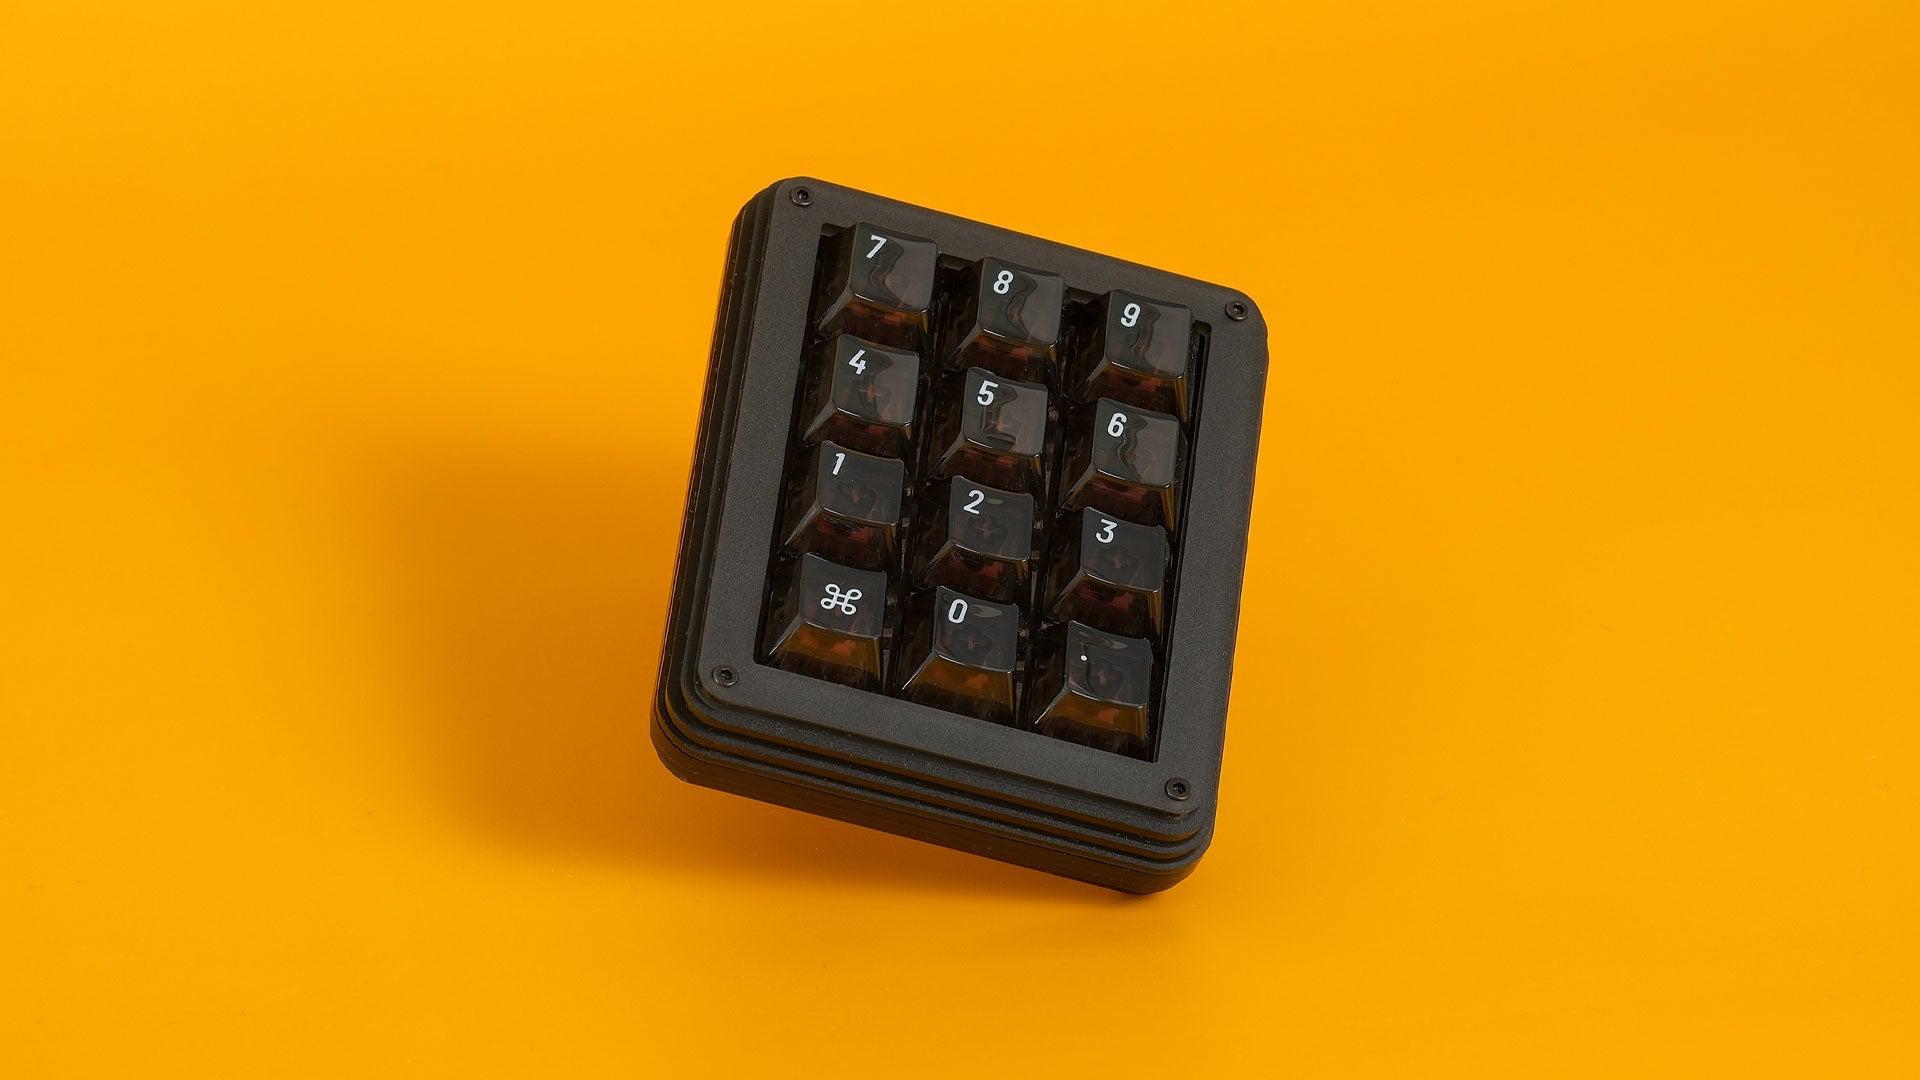 Stellar12-keyboard-keypad-mechanical keyboard-gaming keyboard-custom keyboard